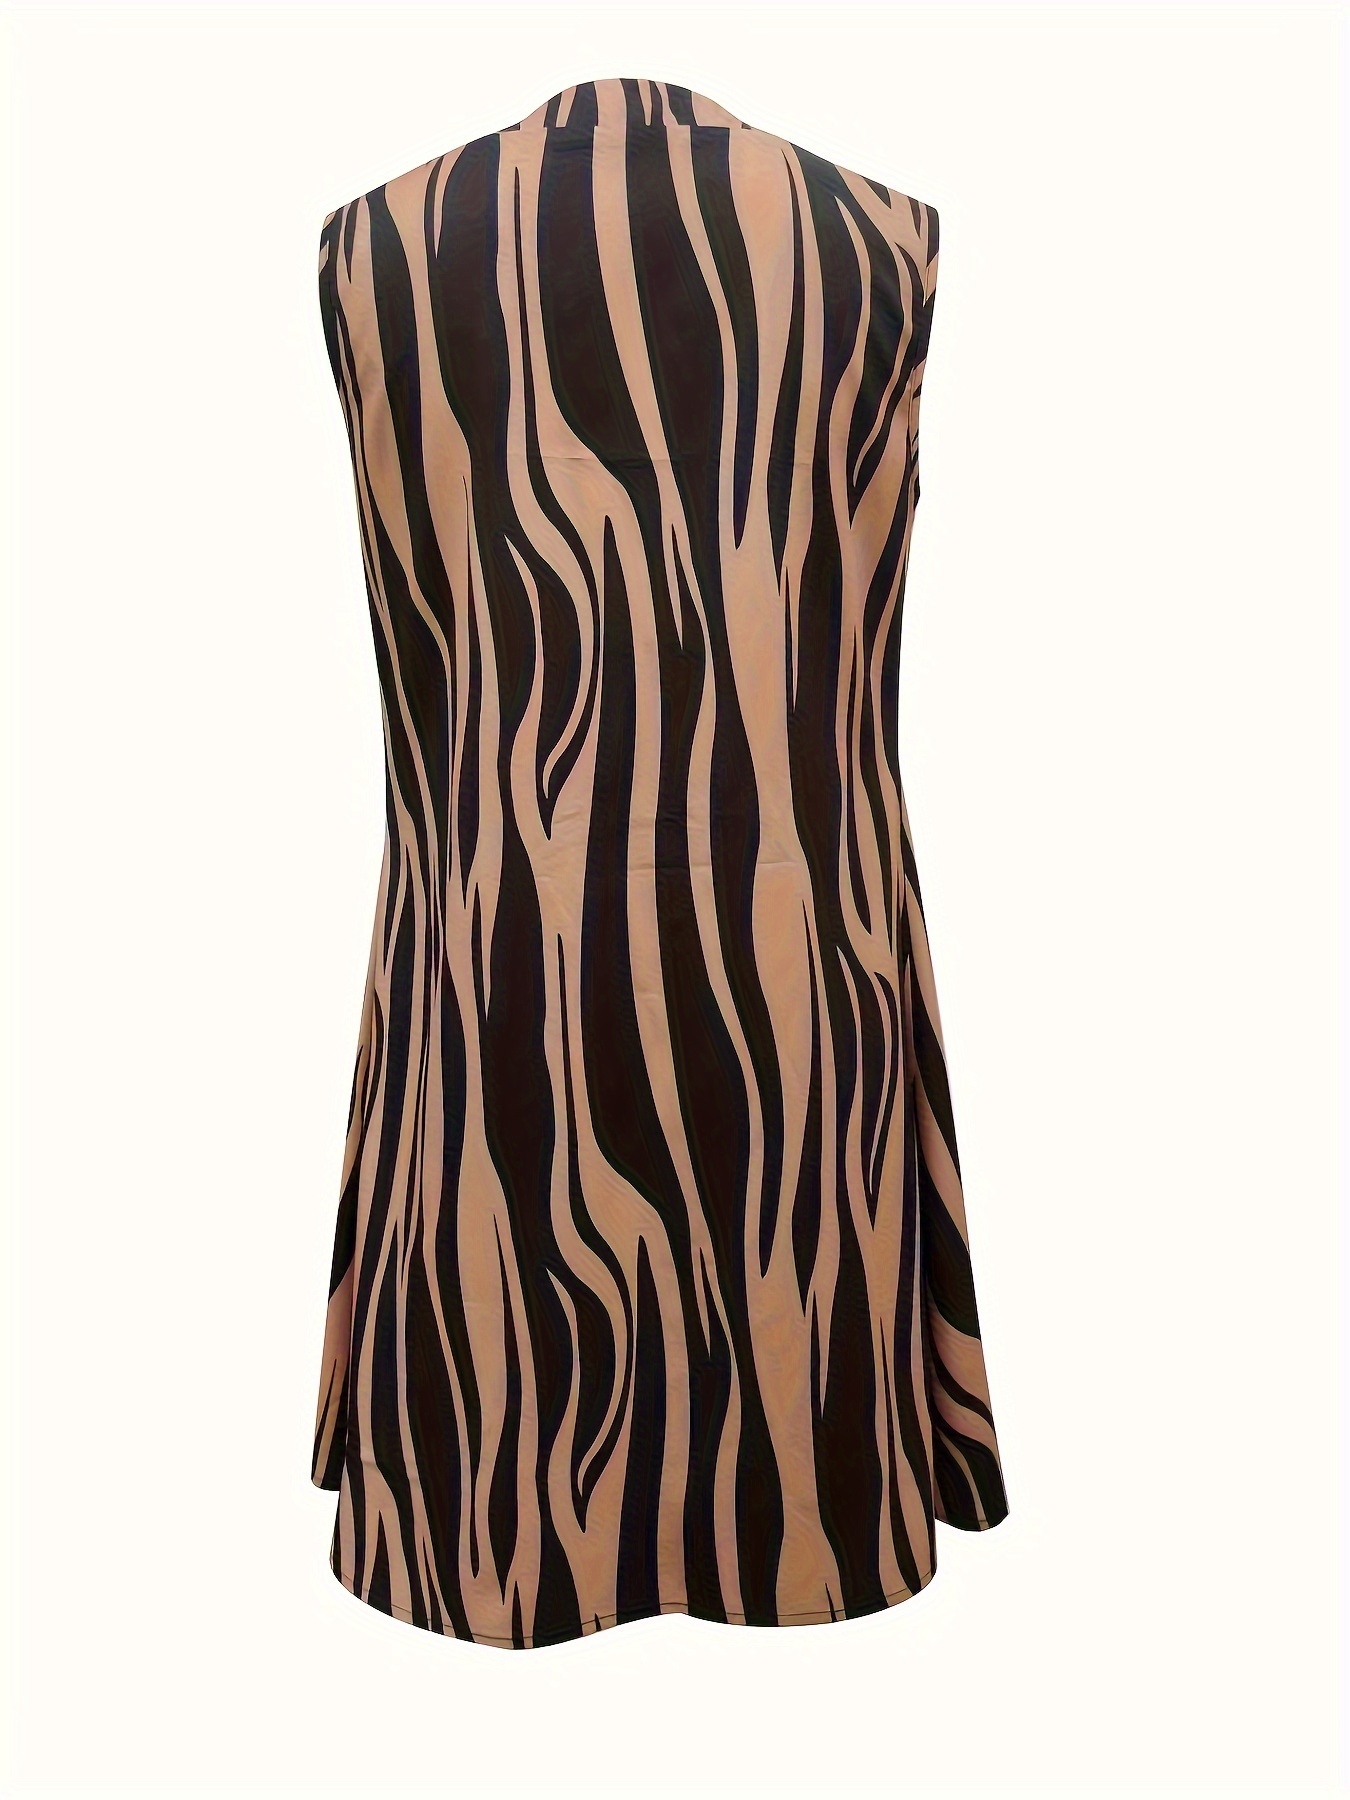 abstract ripple print dress casual v neck sleeveless dress womens clothing details 51